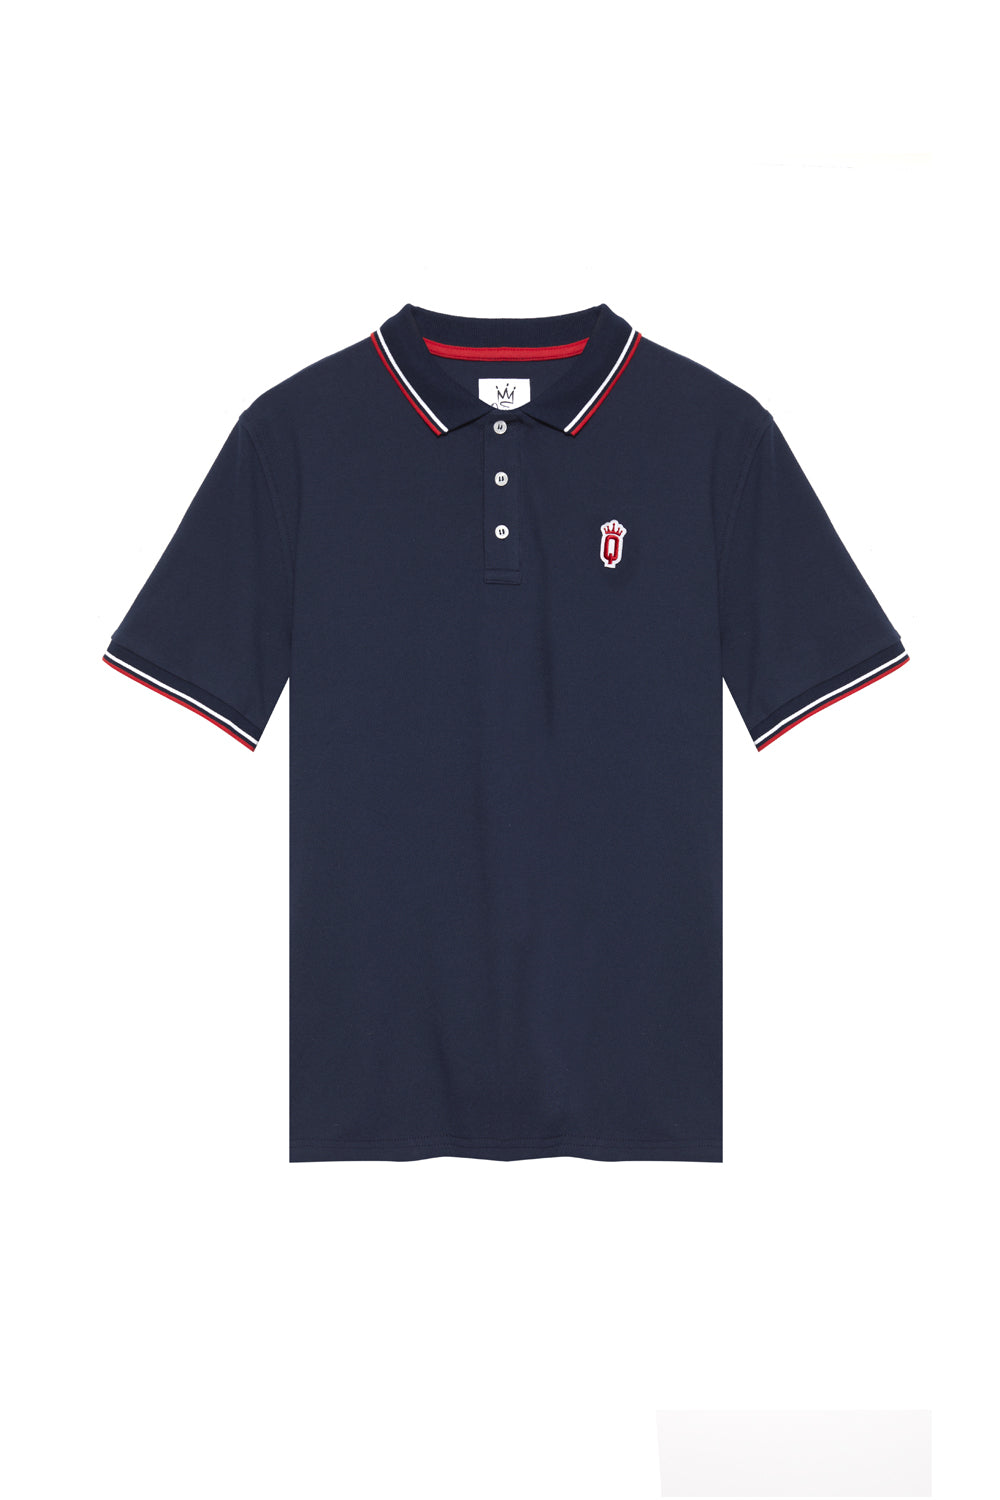 Buy Online Men's Crown Q Logo Polo Shirts - Modern Golf Style 